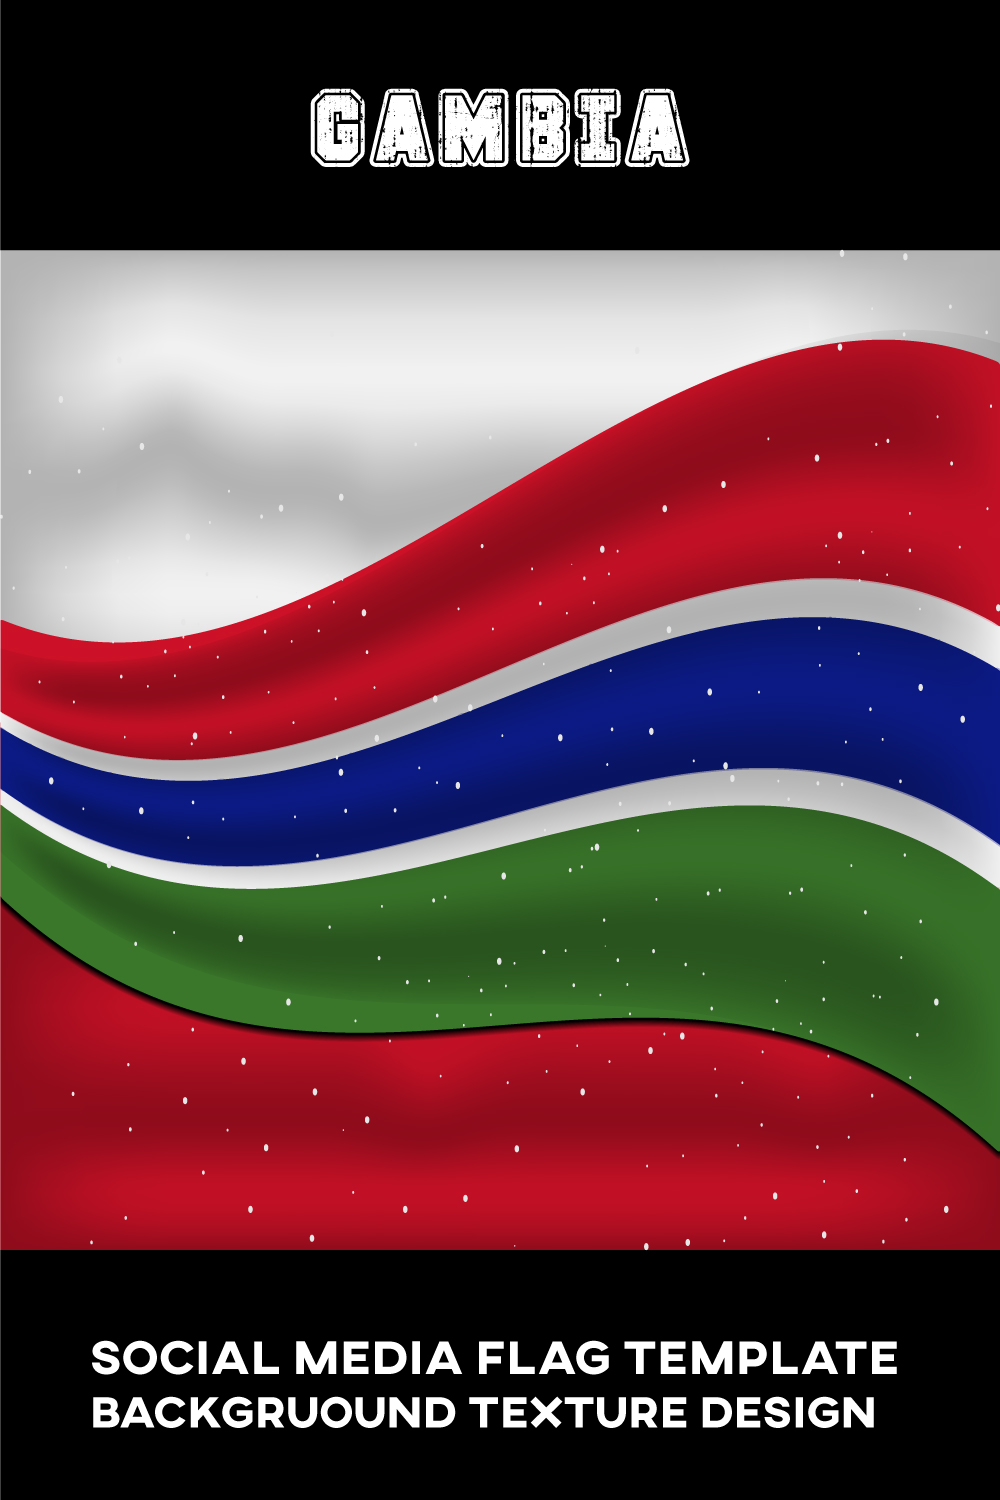 Adorable image of Gambia flag.